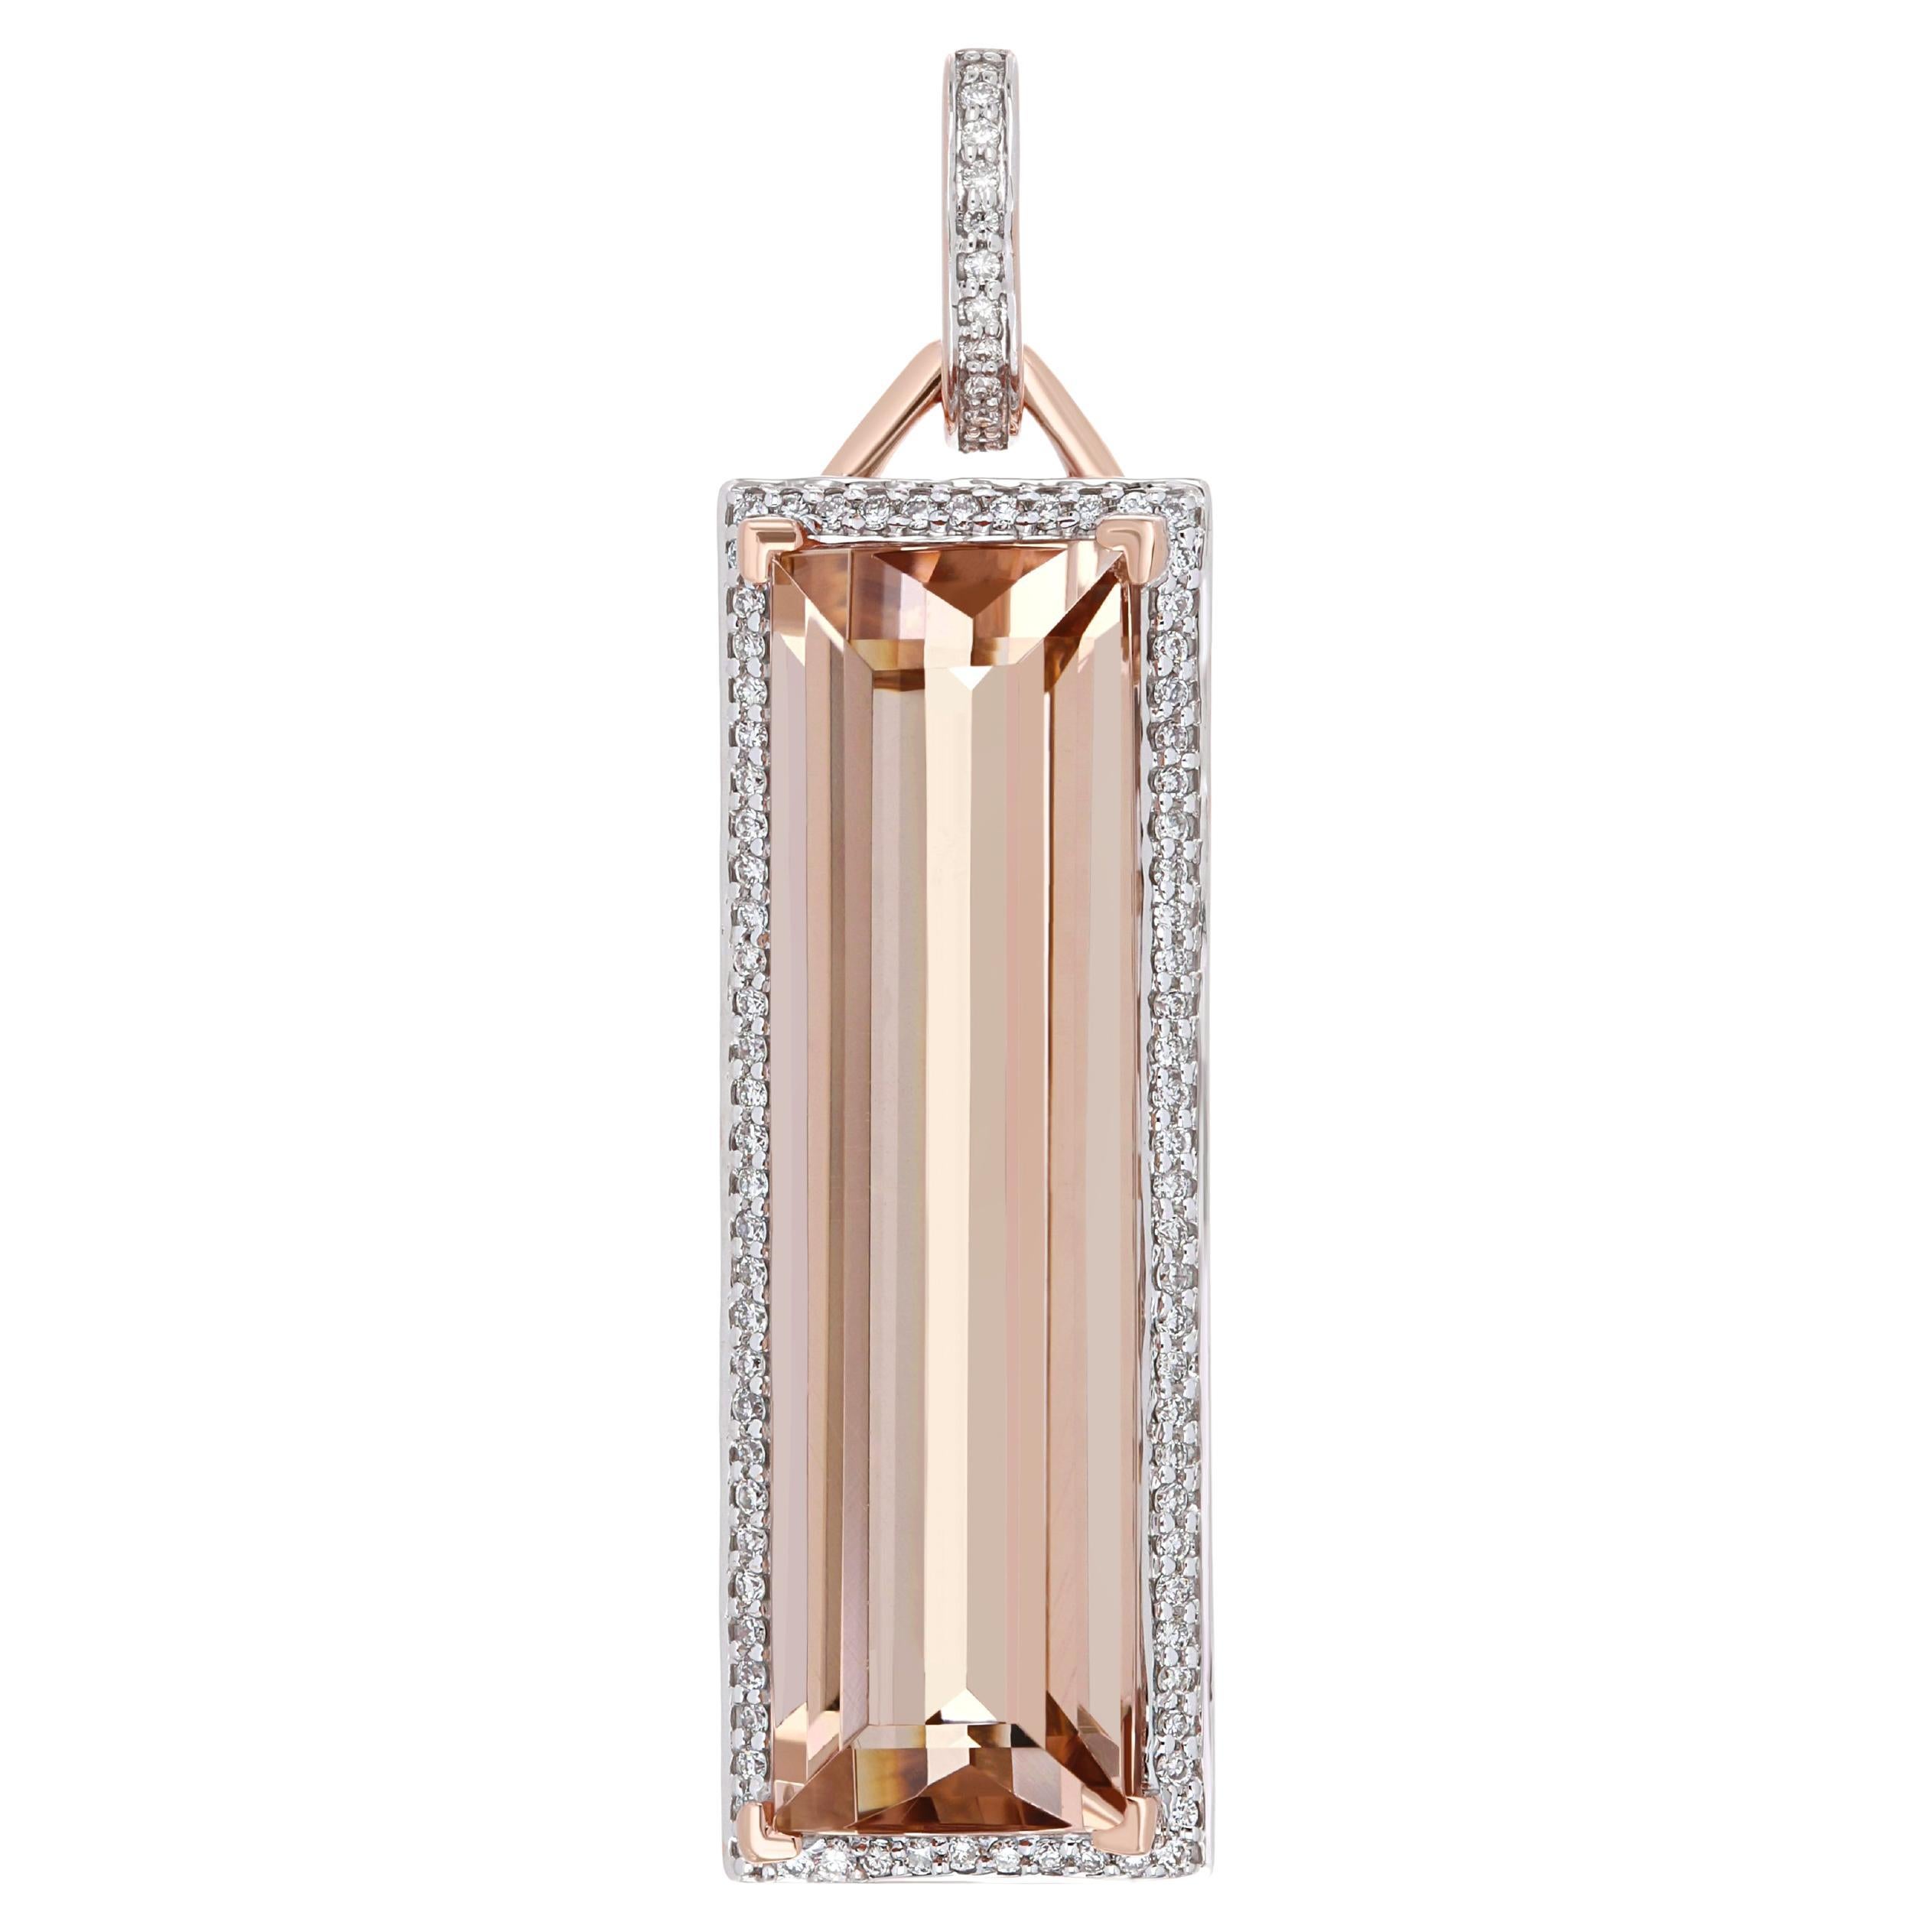 12 Carat Morganite Pendant with Diamonds in 14 Karat Rose Gold Handcraft jewelry For Sale